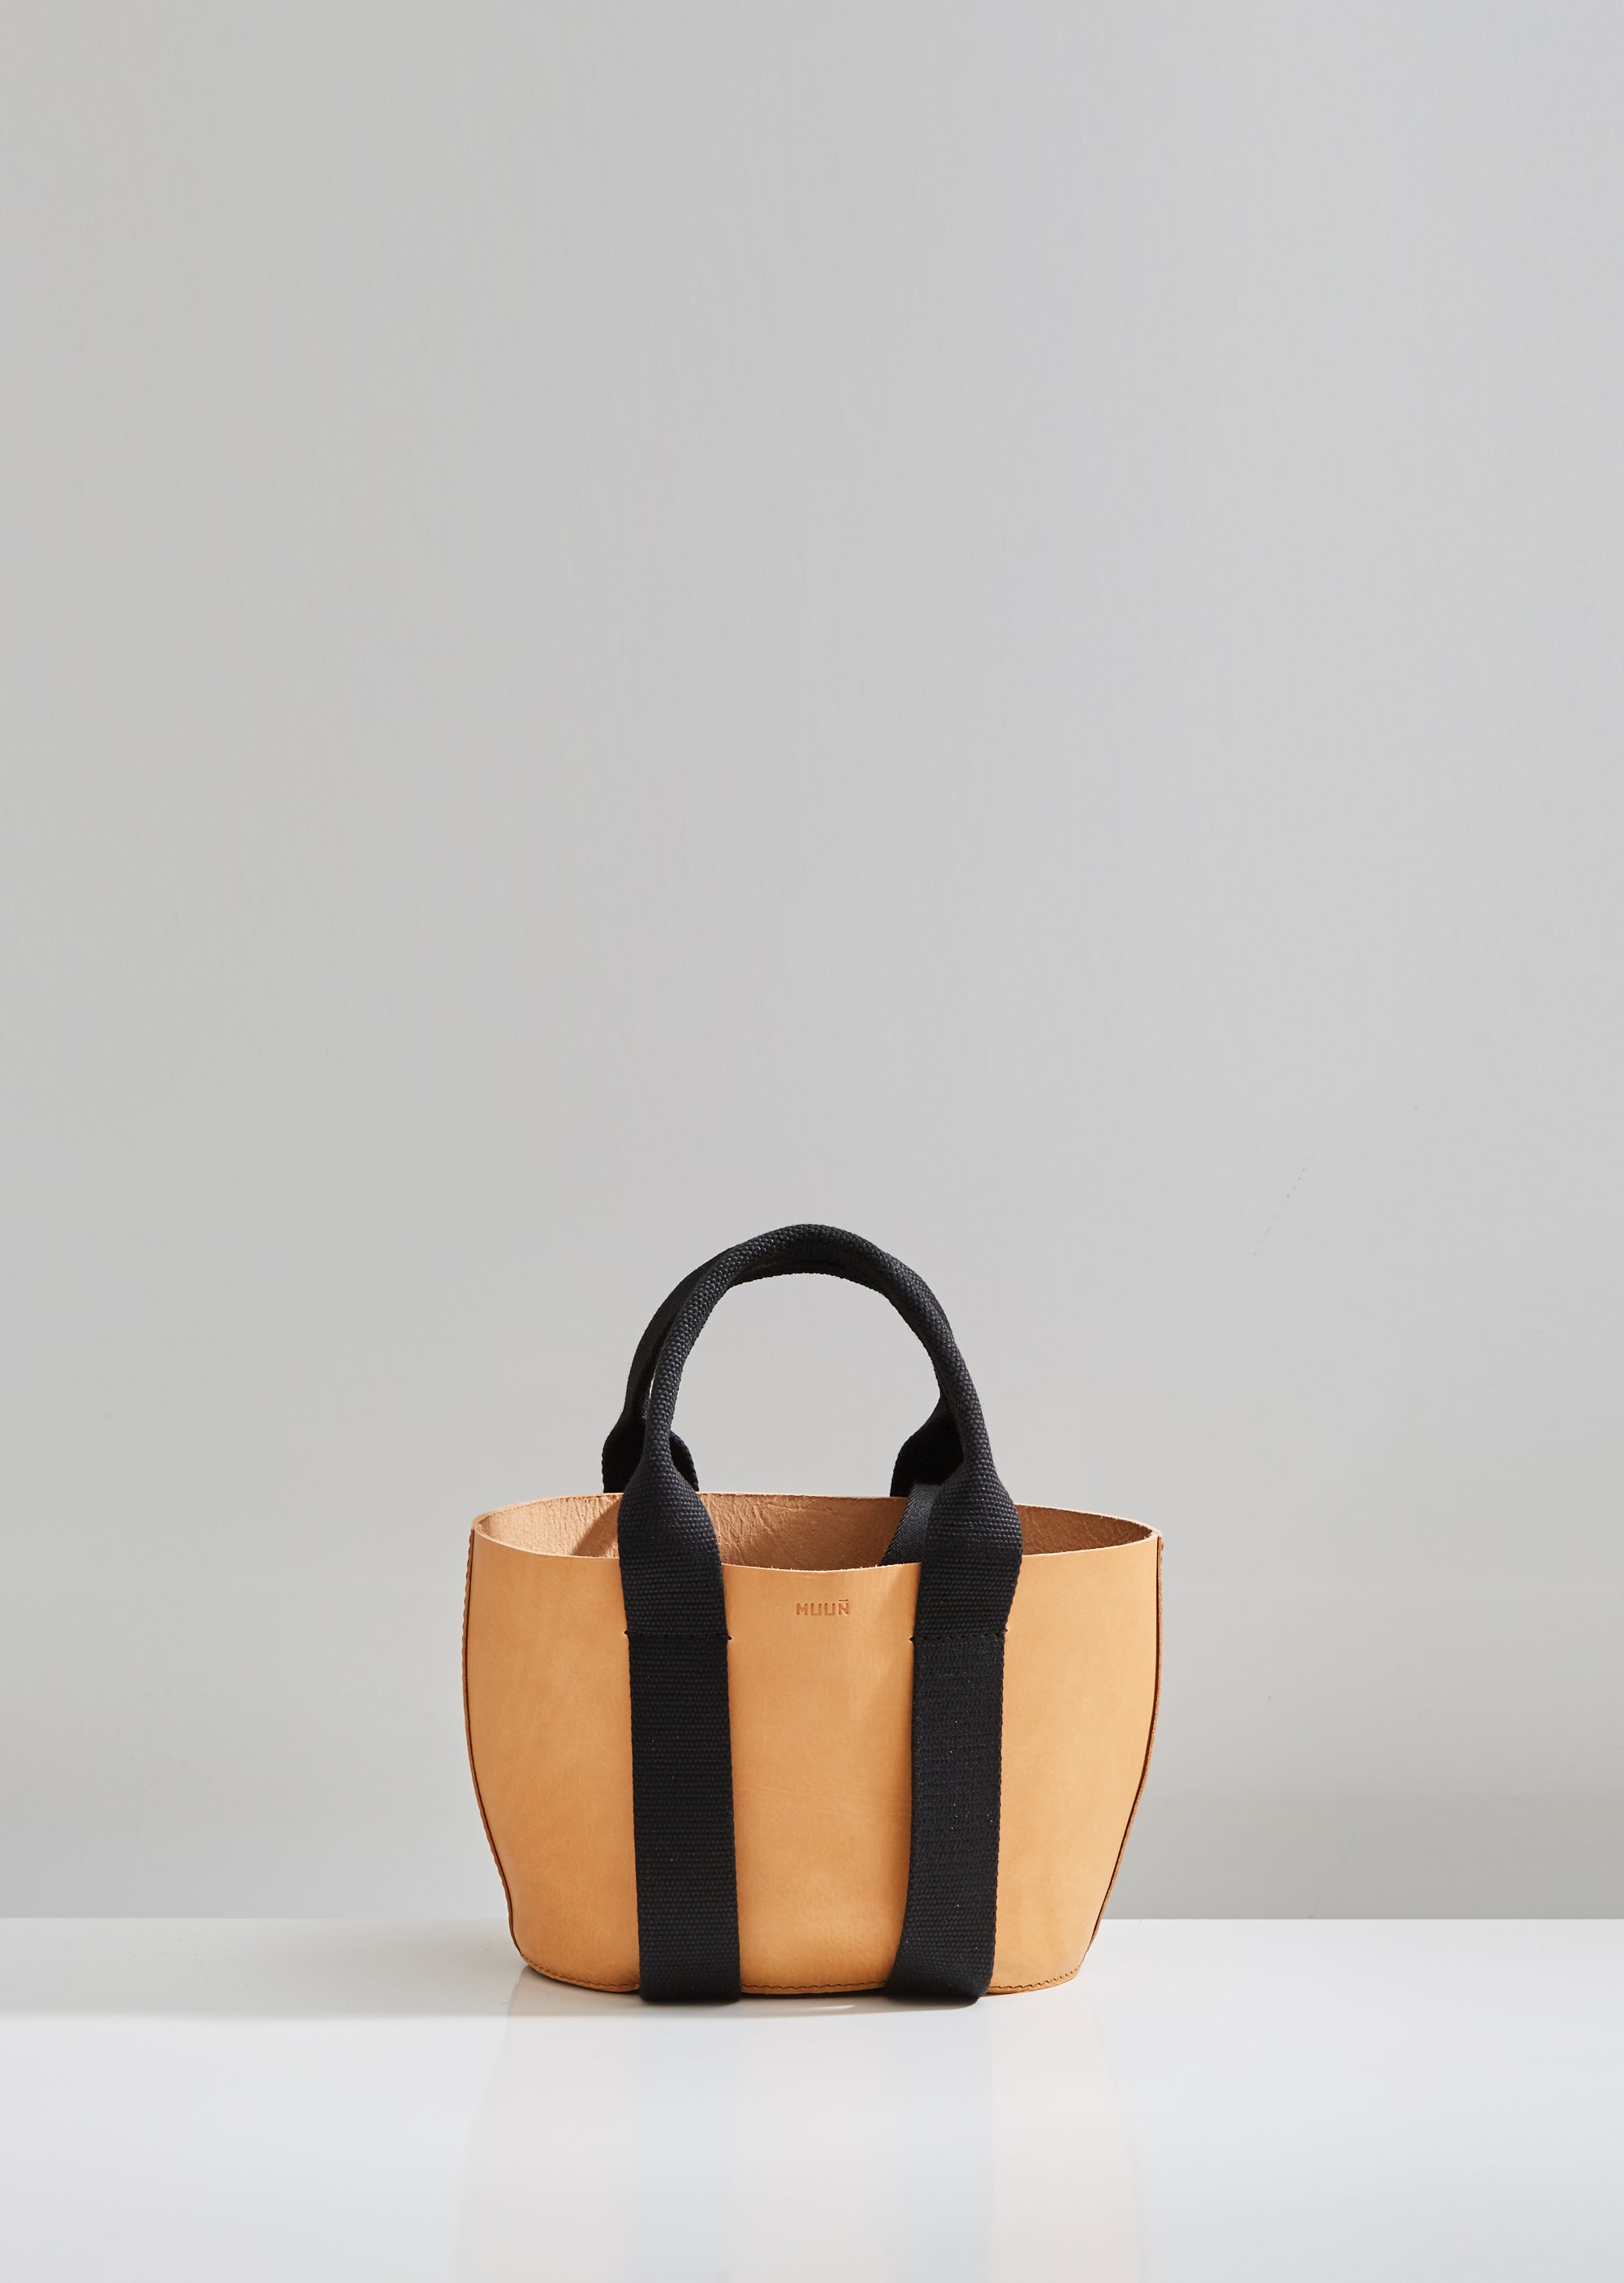 Mini Shoulder Orange Bag by Atelier Mélange - ZOCO LAB